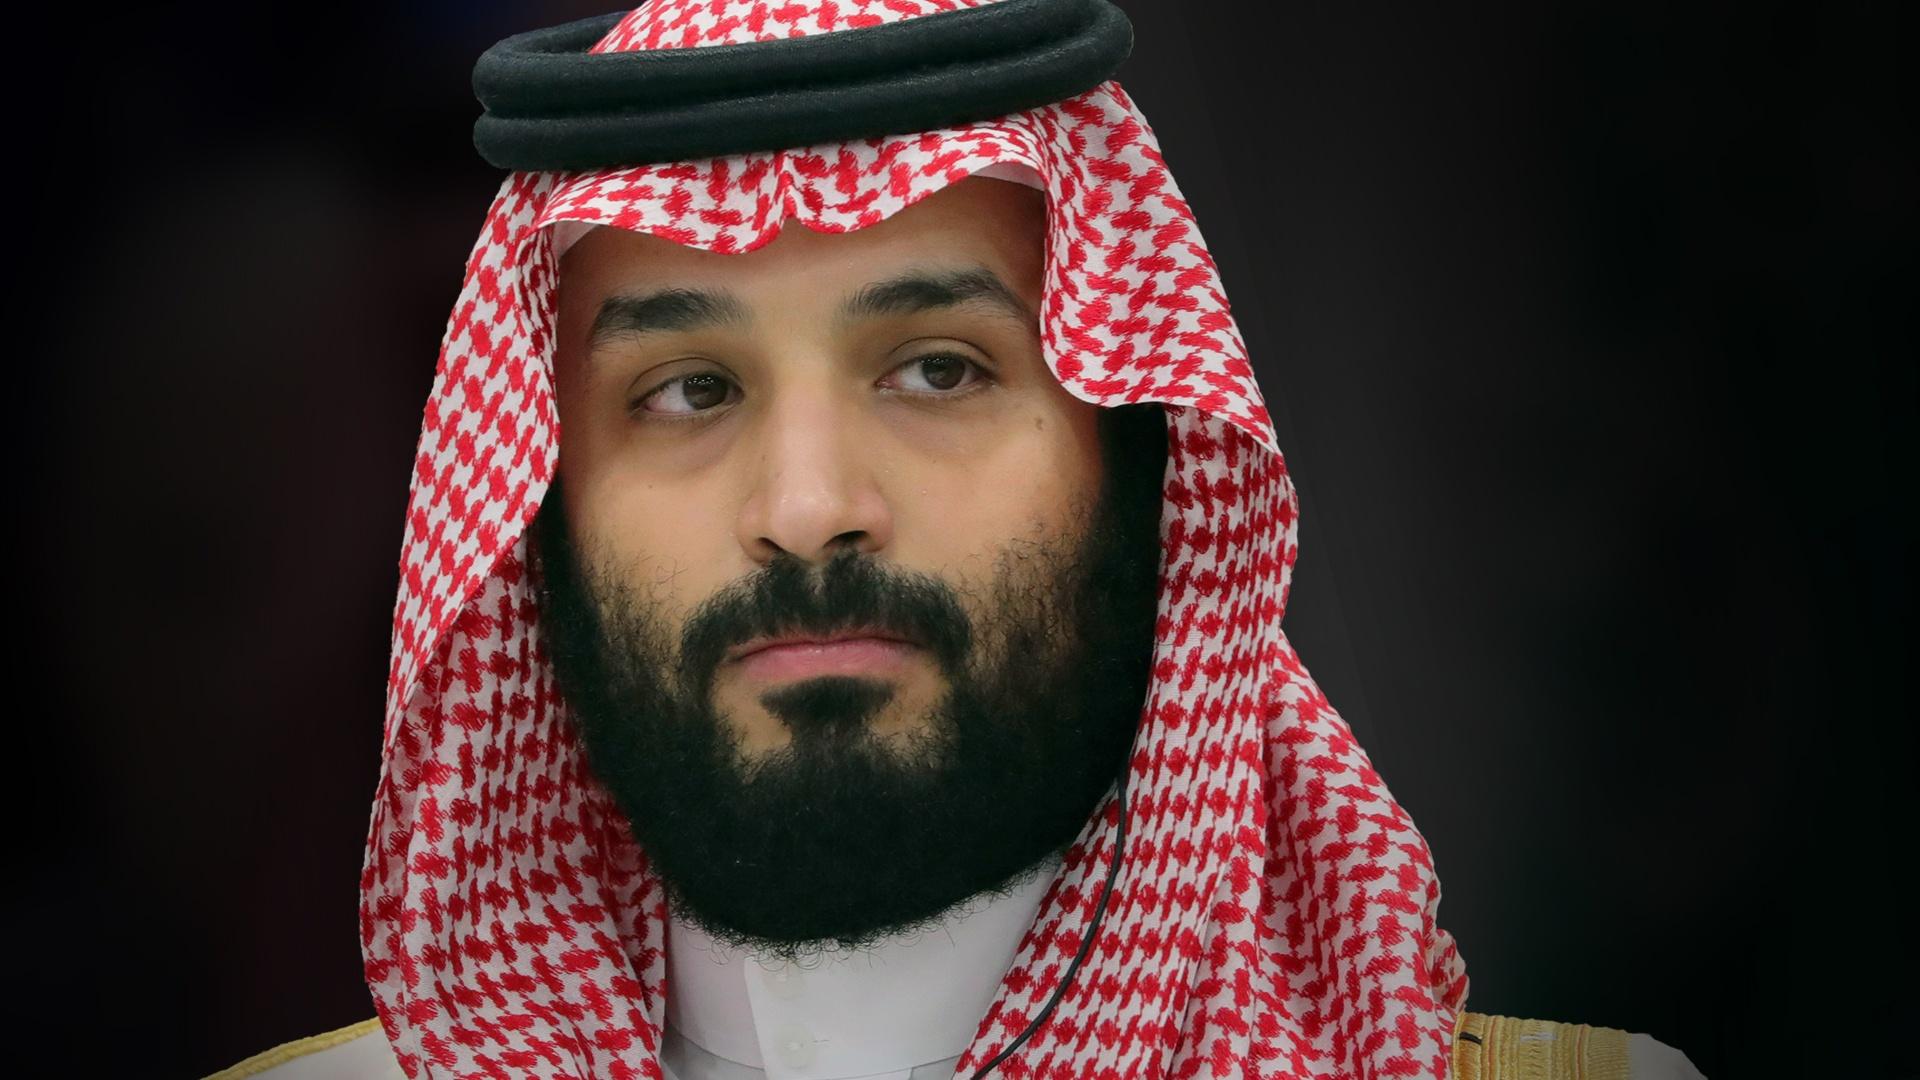 People Who Belong in Prison - The prince of Saudi Arabia